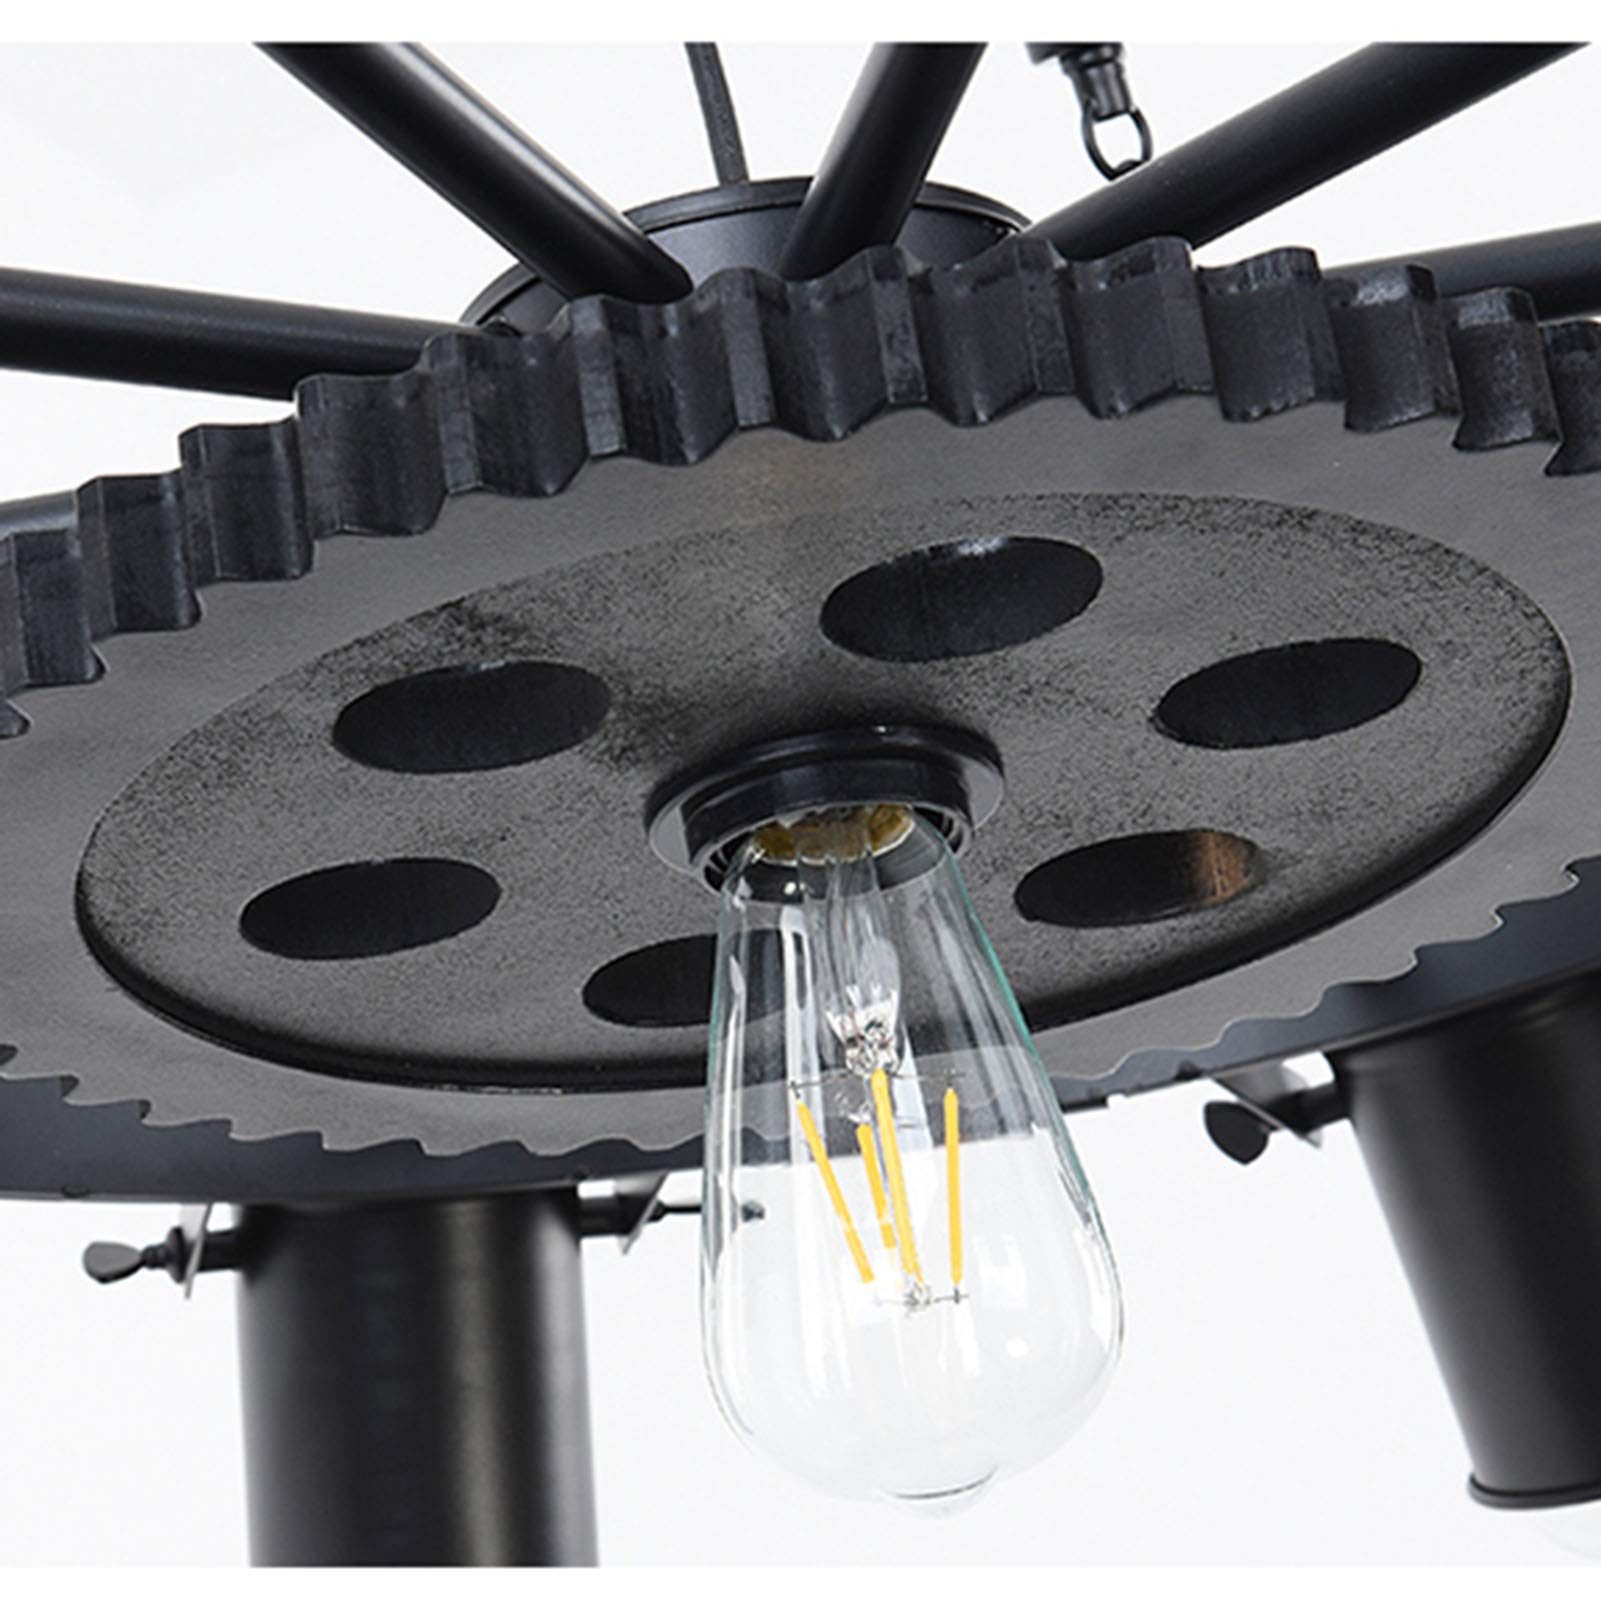 Epoch Modern LED Pendant Lamp Black Metal/Rope Café/Bar/Living Room